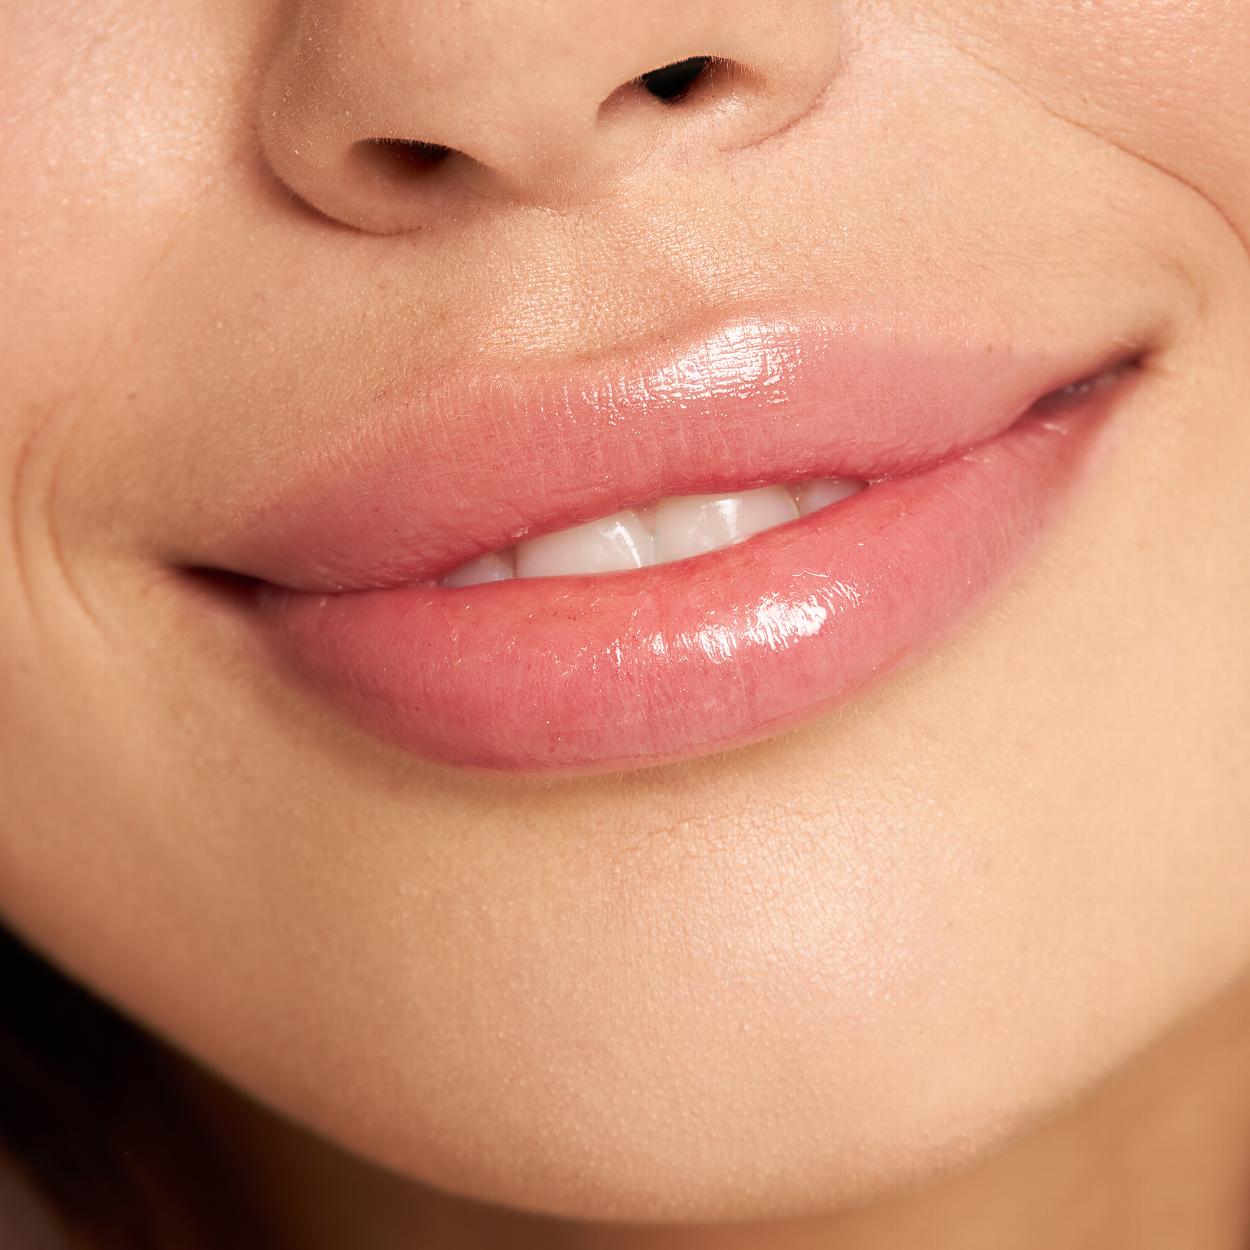 Lip filler treatment results